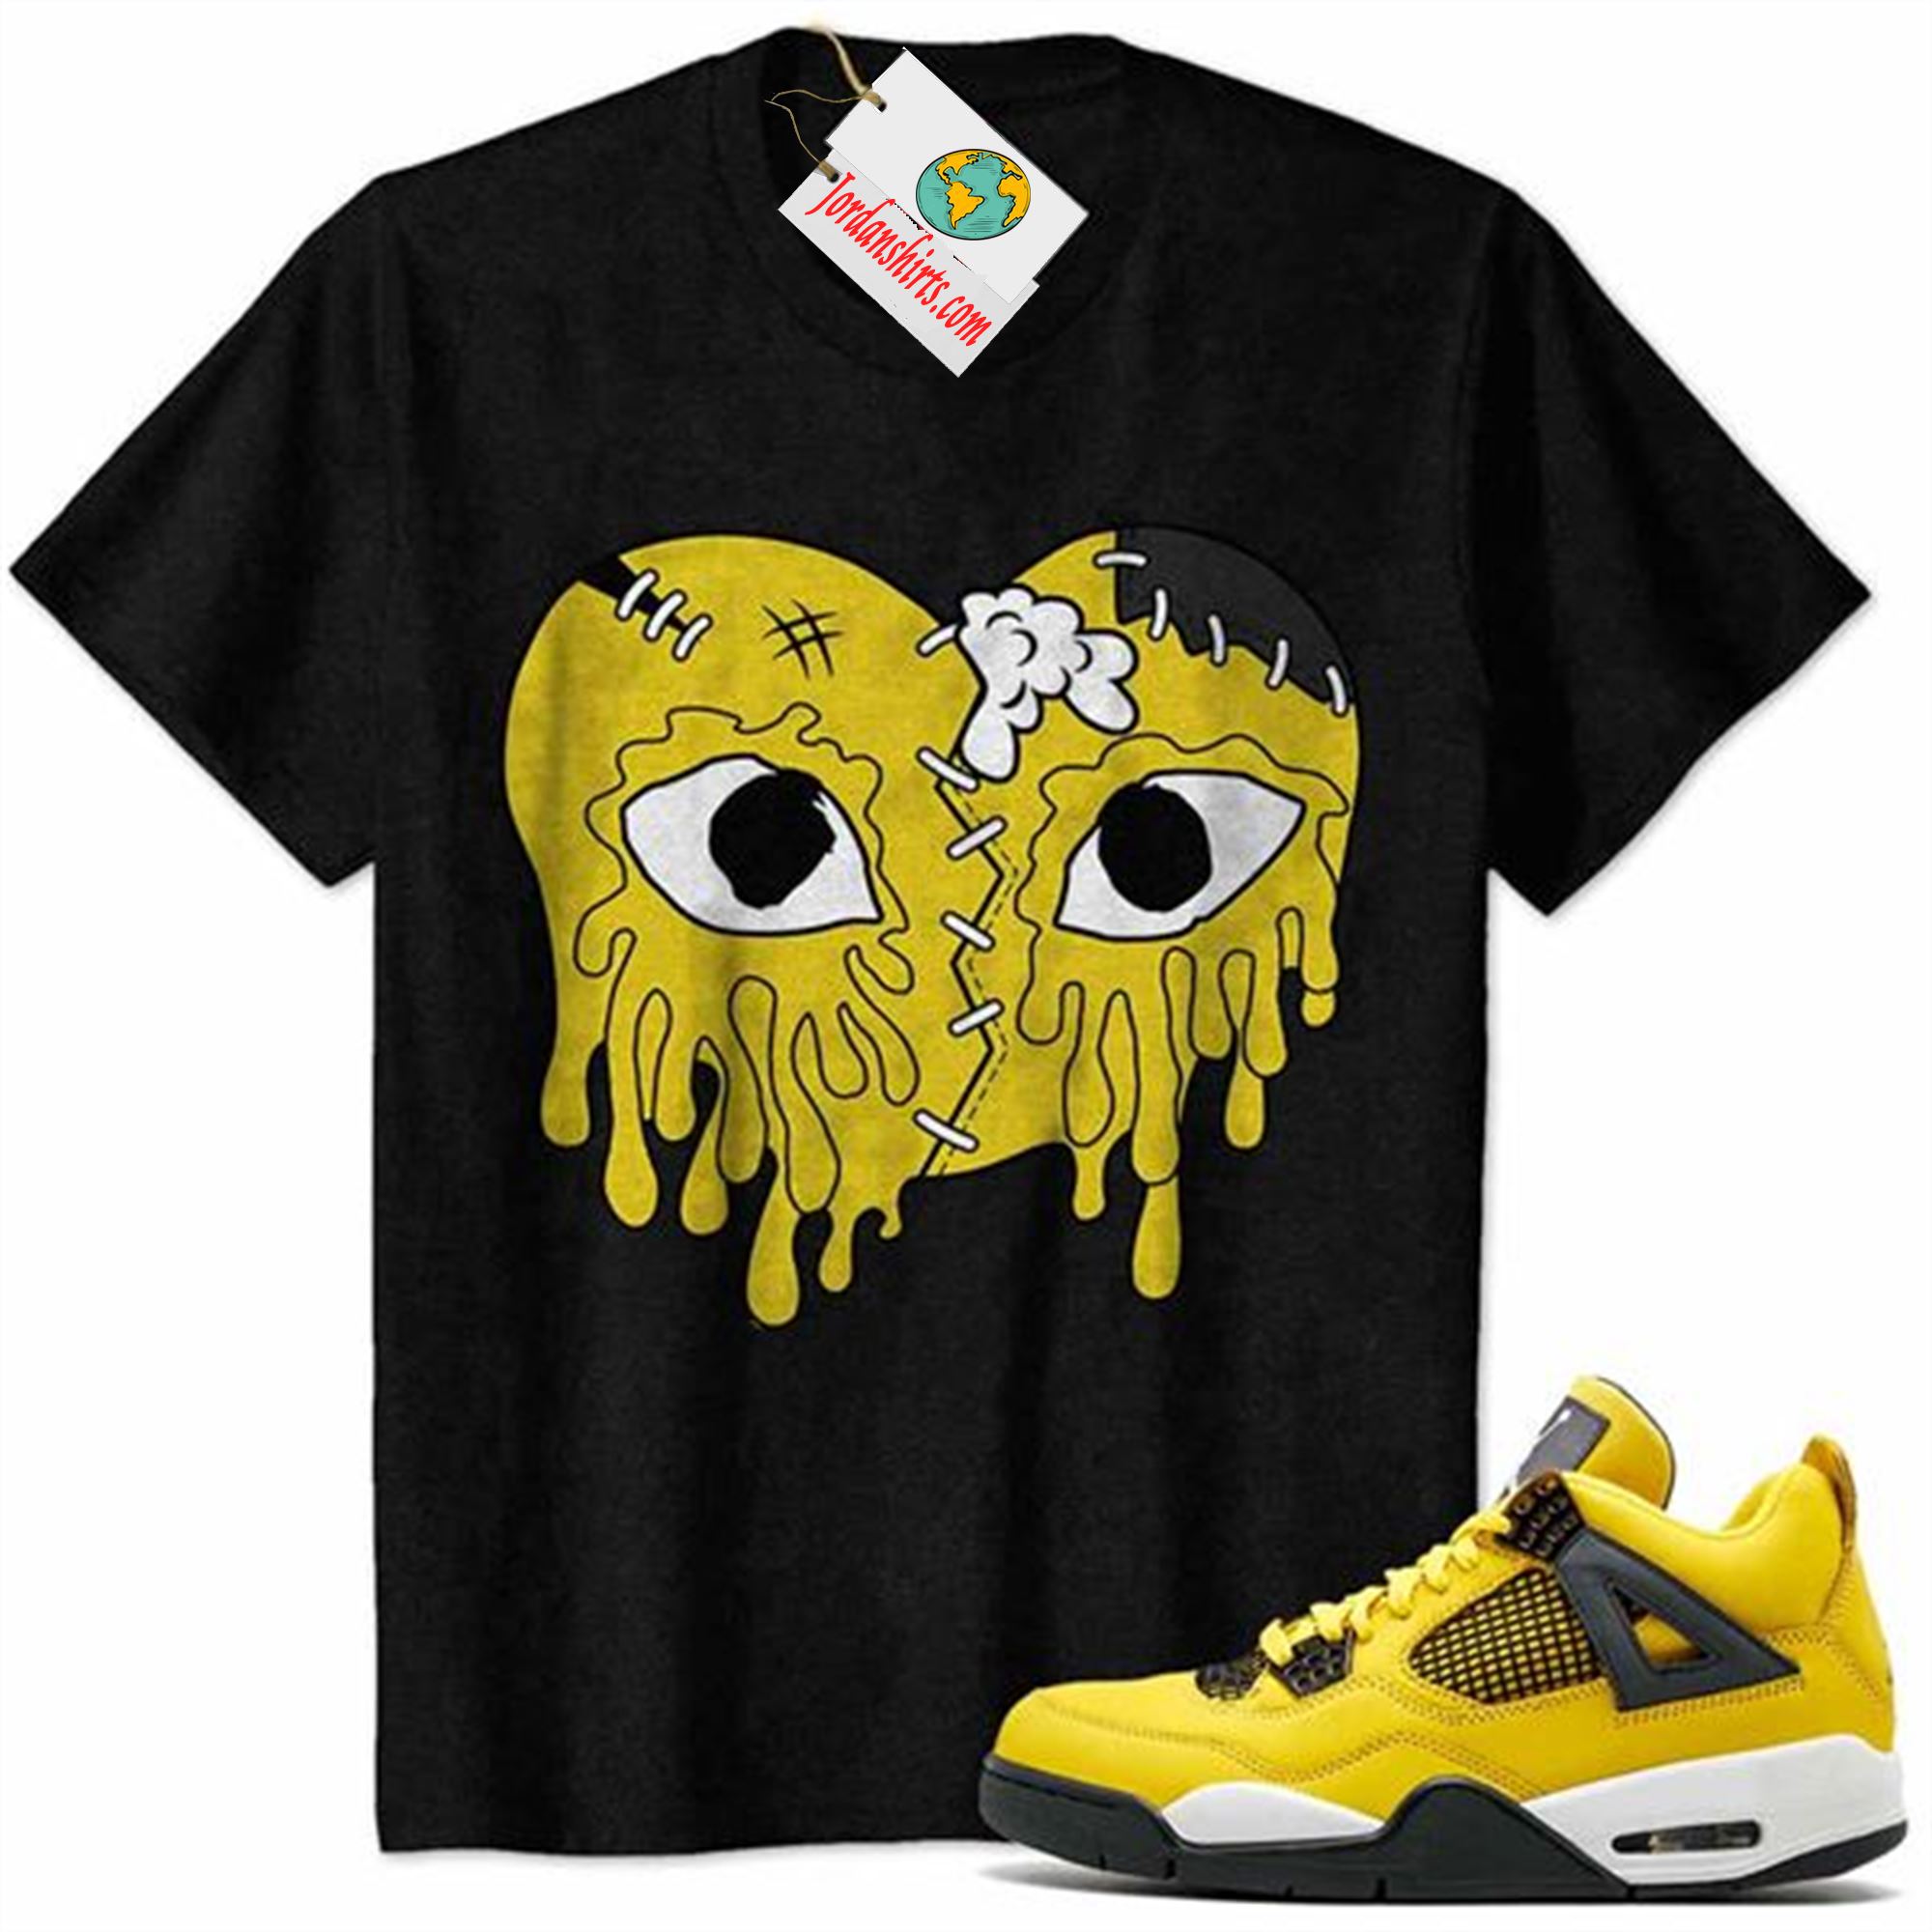 Jordan 4 Shirt, Crying Heart Drip Black Air Jordan 4 Tour Yellow Lightning 4s Full Size Up To 5xl